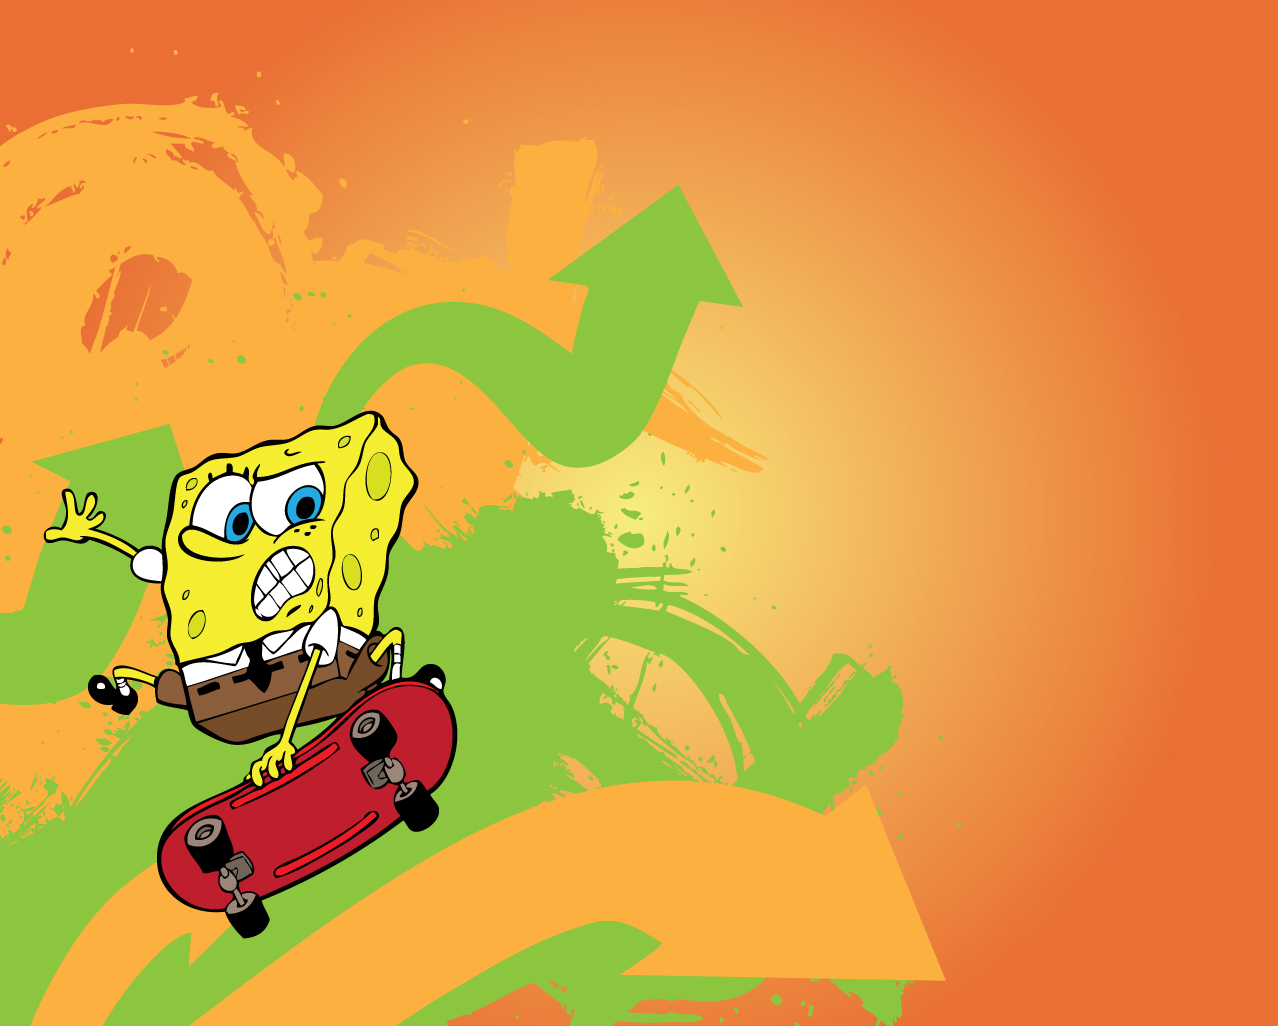 Spongebob Skateboard Wallpaper Image With